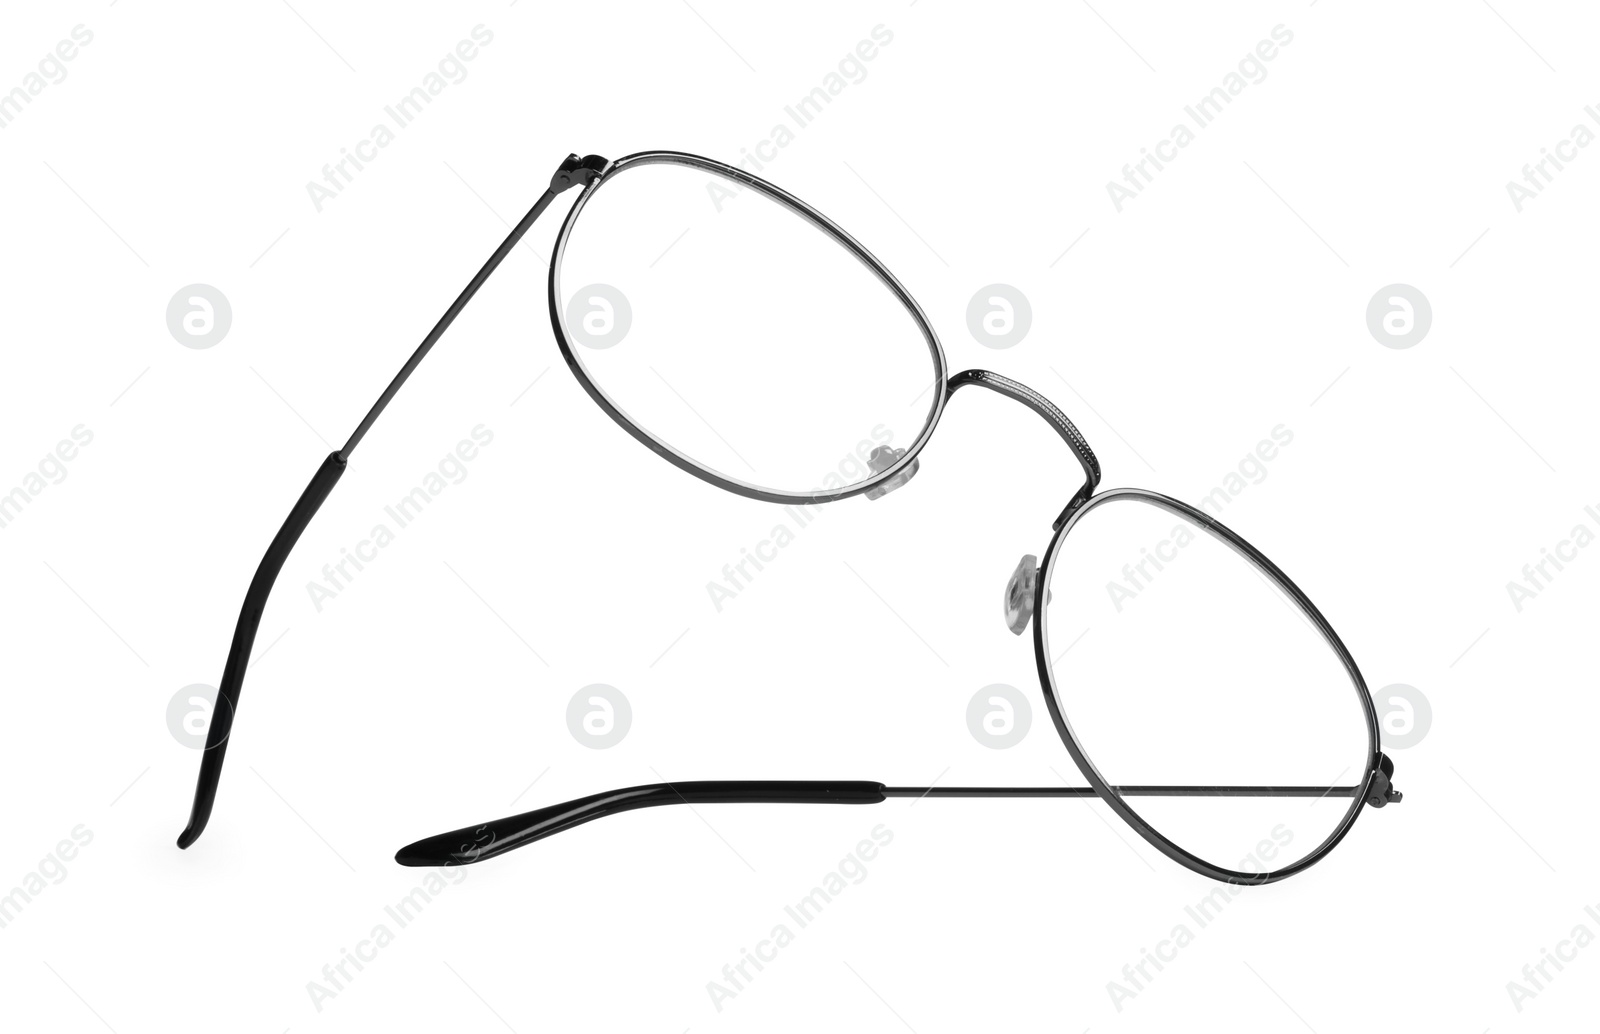 Photo of Stylish pair of glasses isolated on white